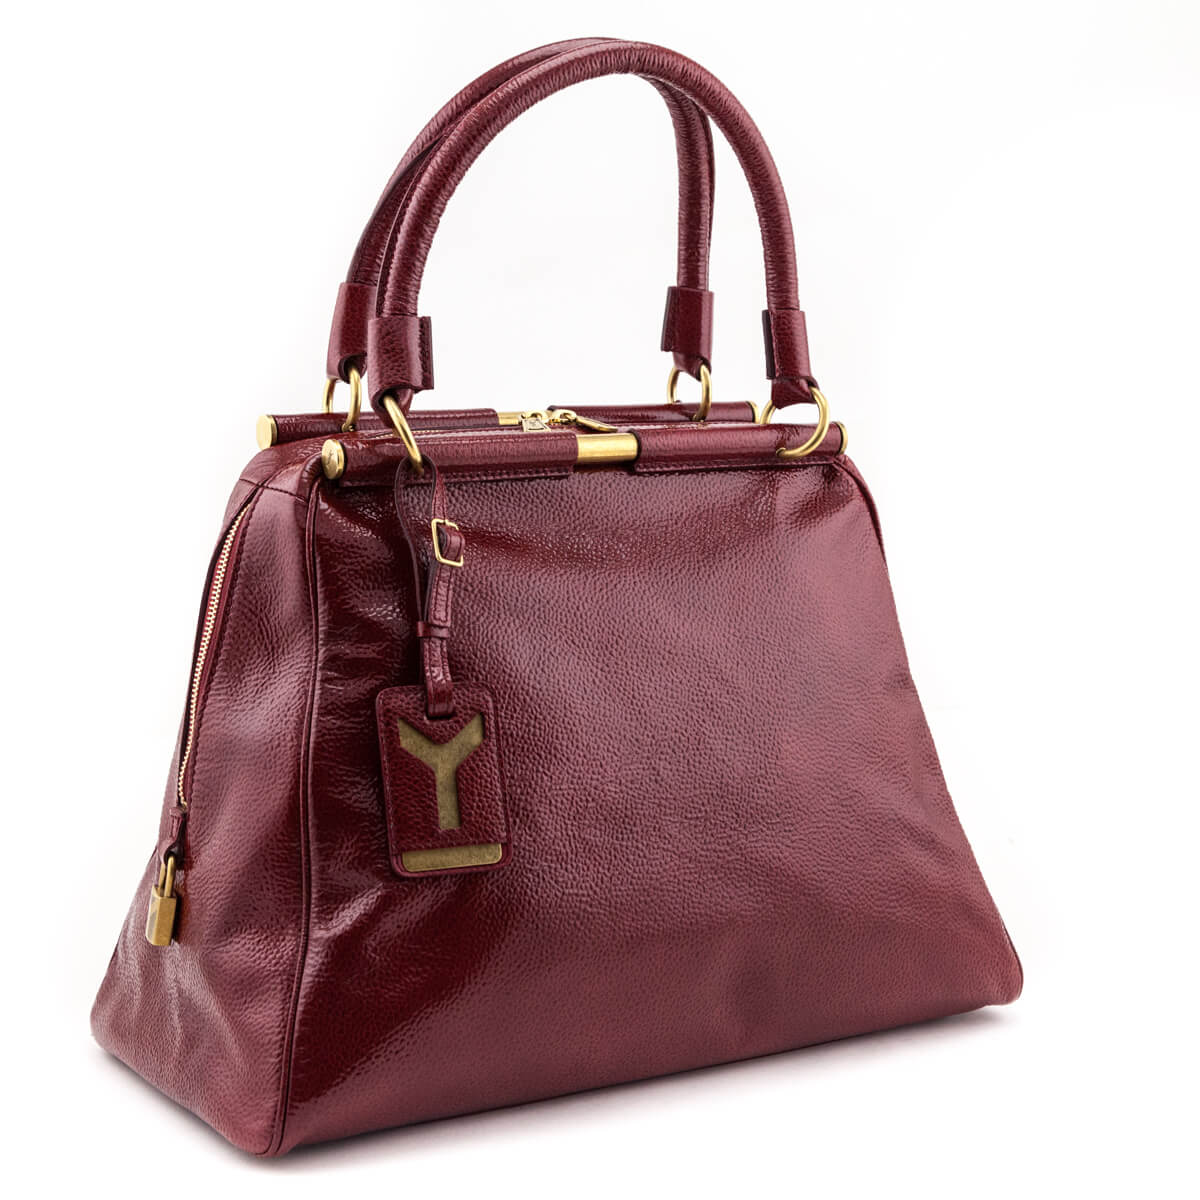 Saint Laurent Red Patent Bag - Love that Bag etc - Preowned Authentic Designer Handbags & Preloved Fashions